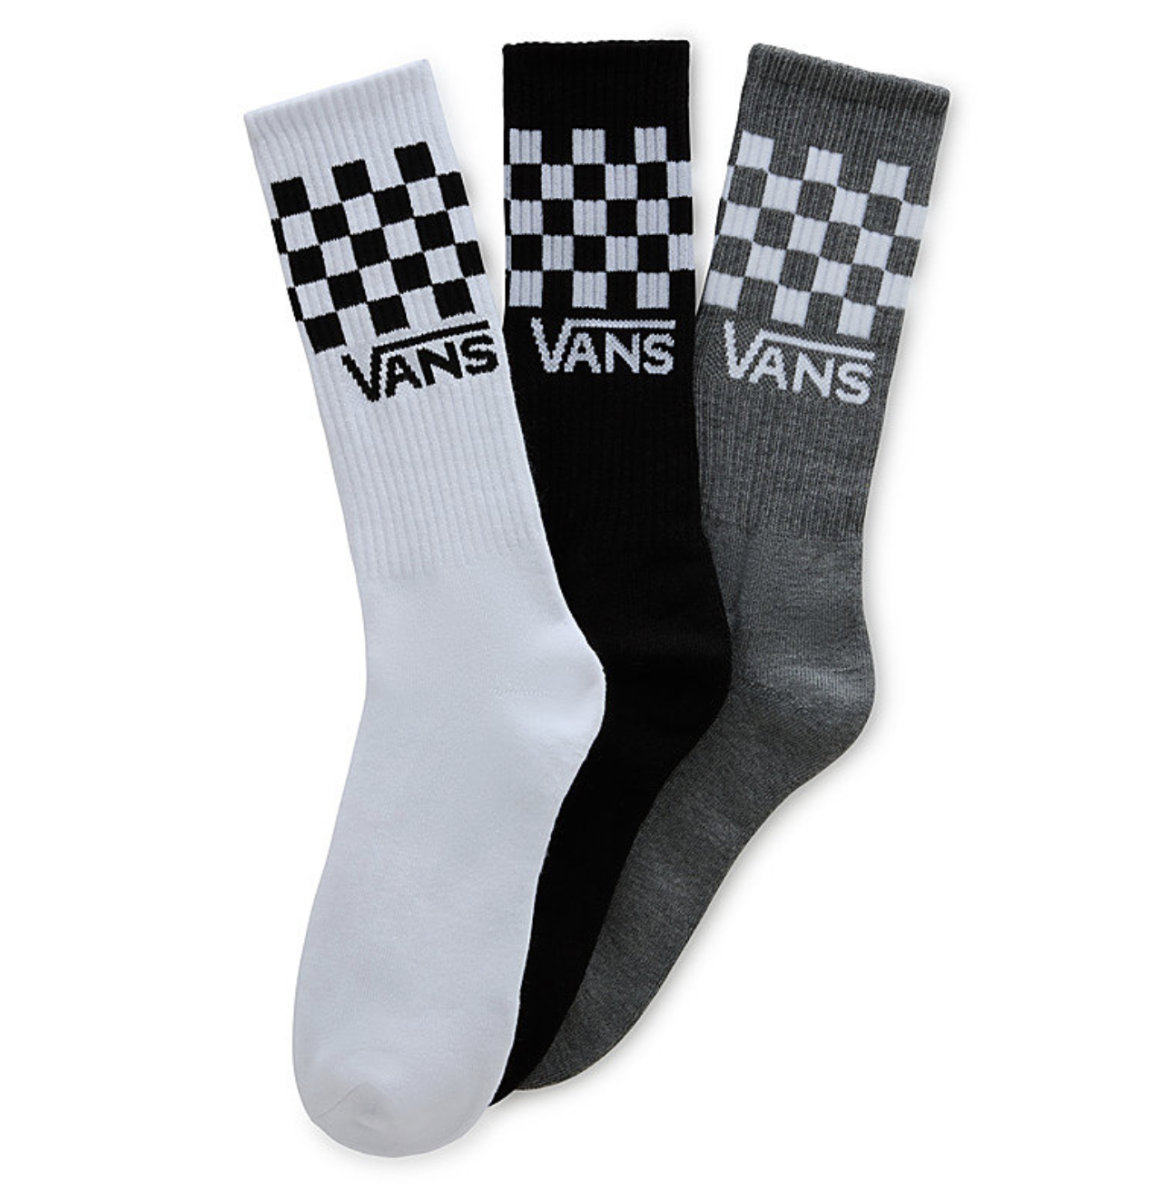 Vans sock pack classic